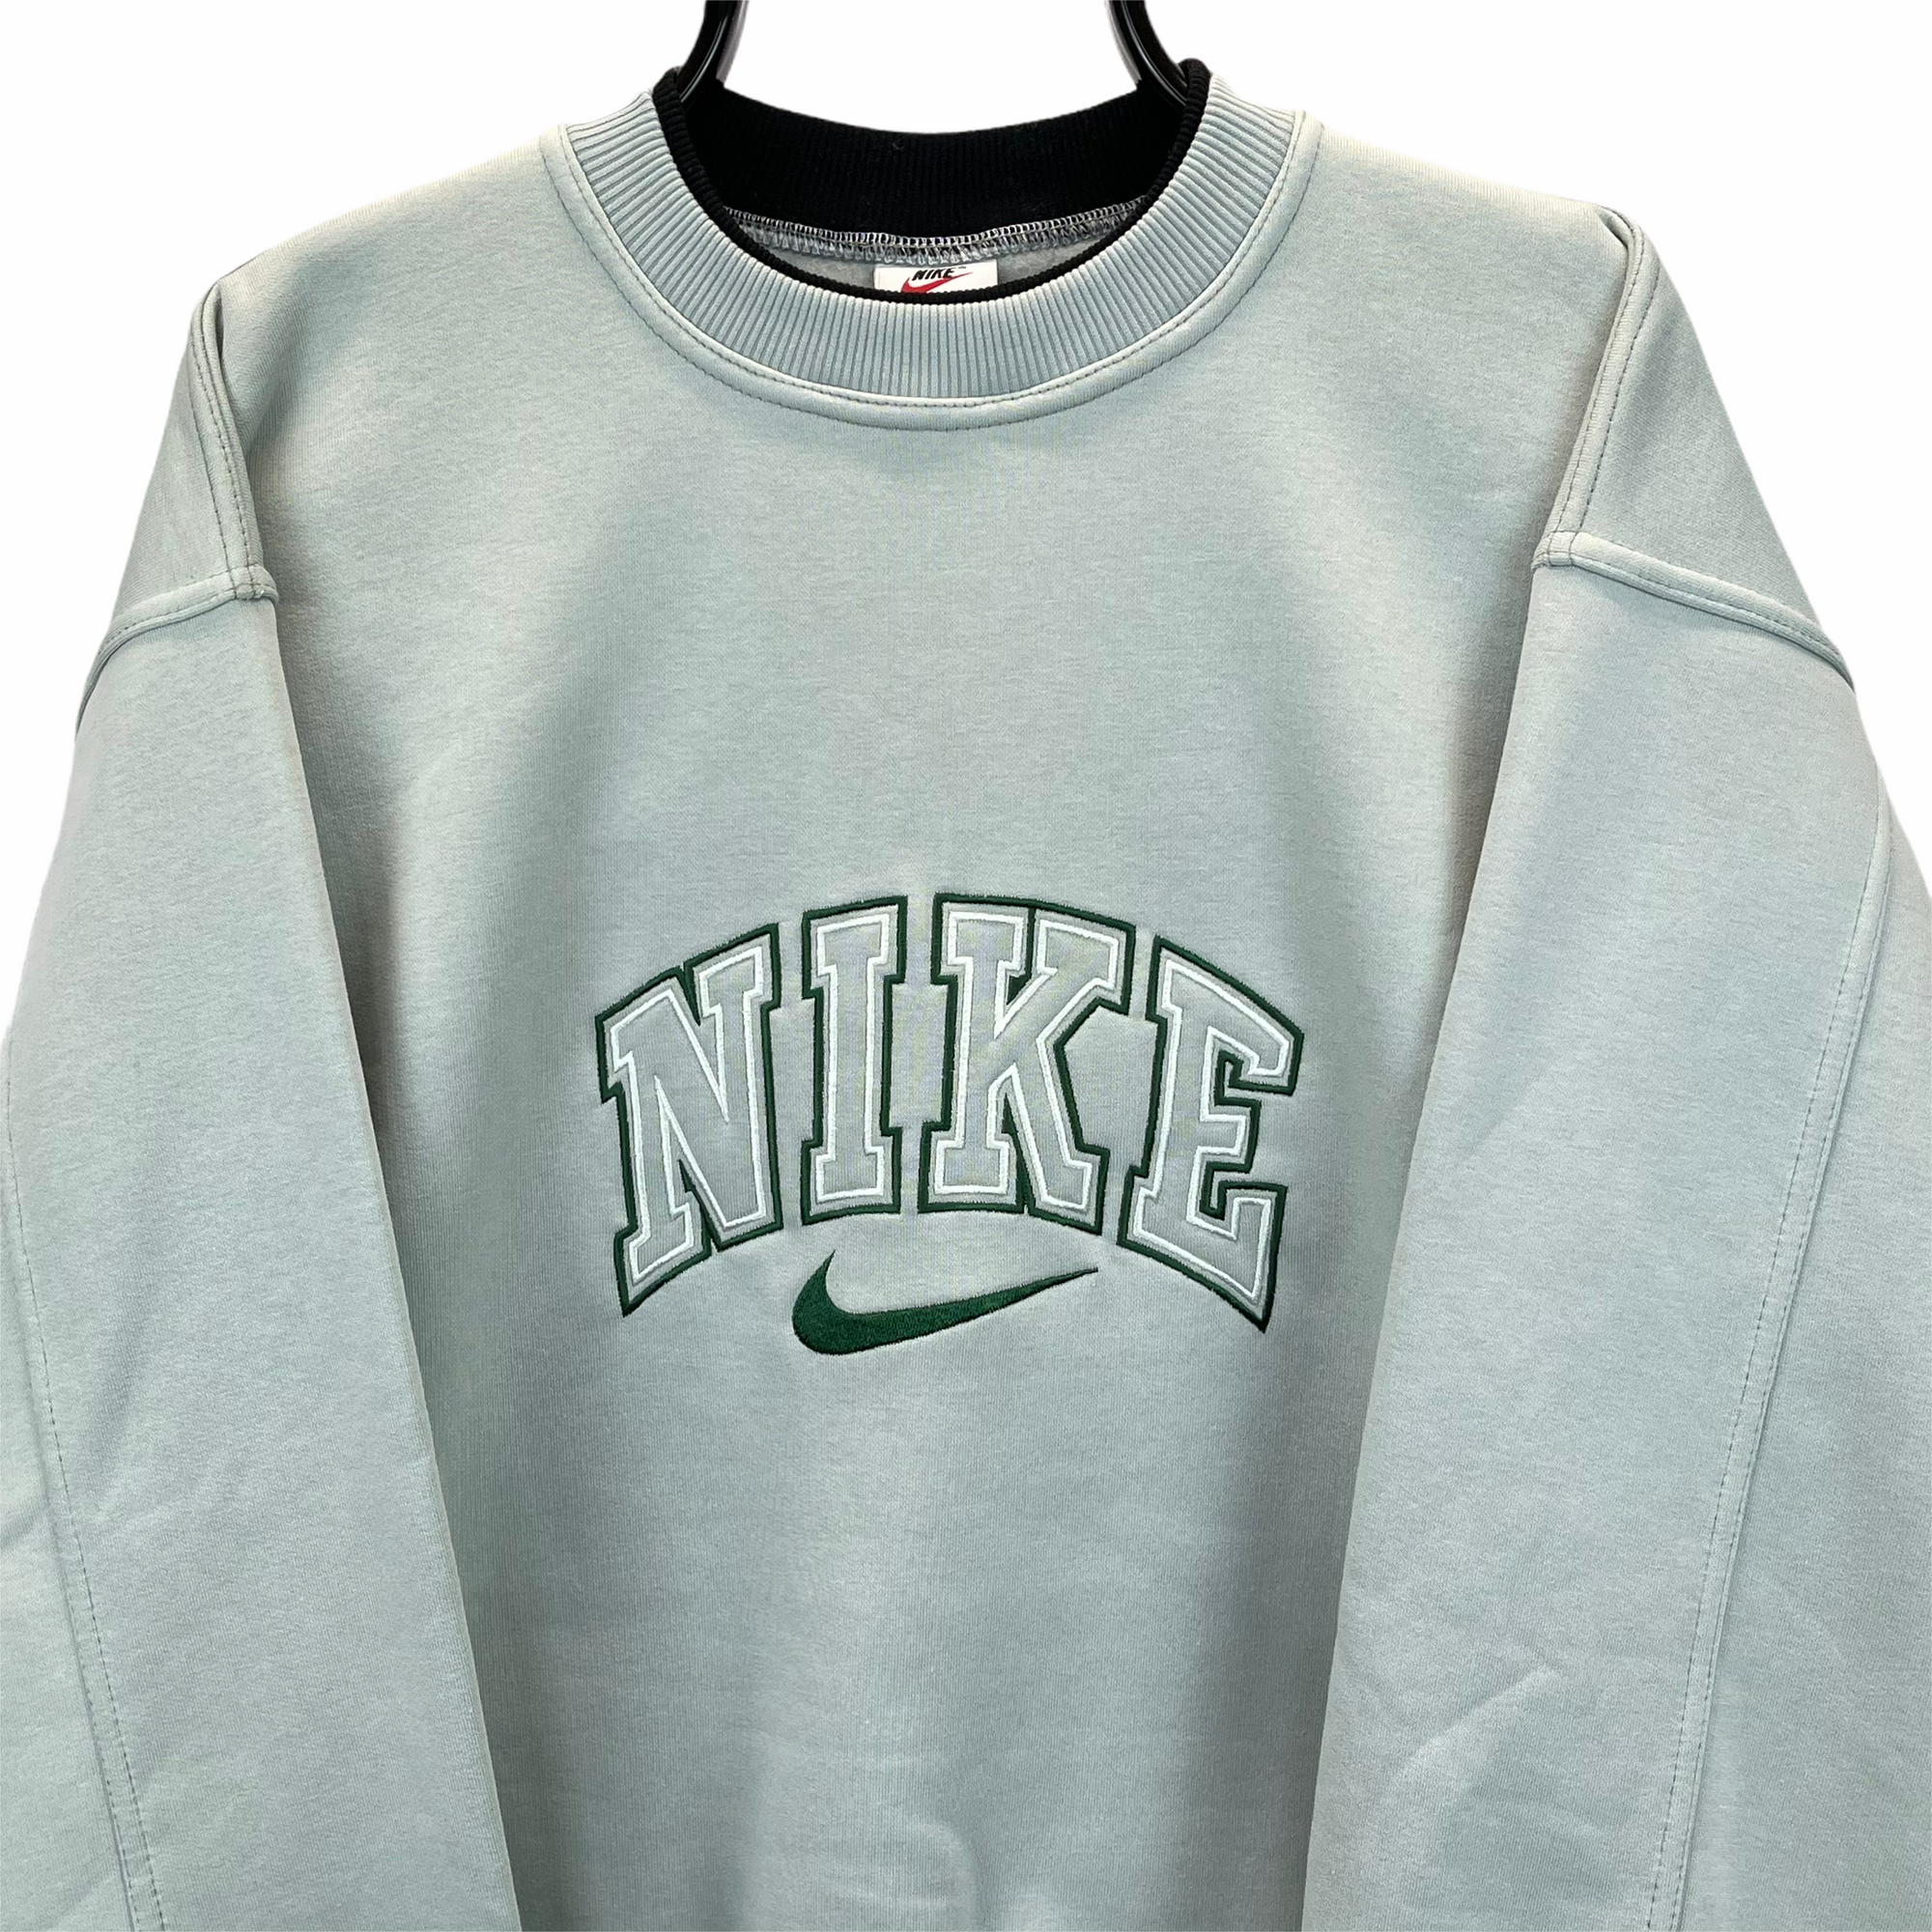 Nike Spellout Sweatshirt in Sage - Men's Large/Women's XL